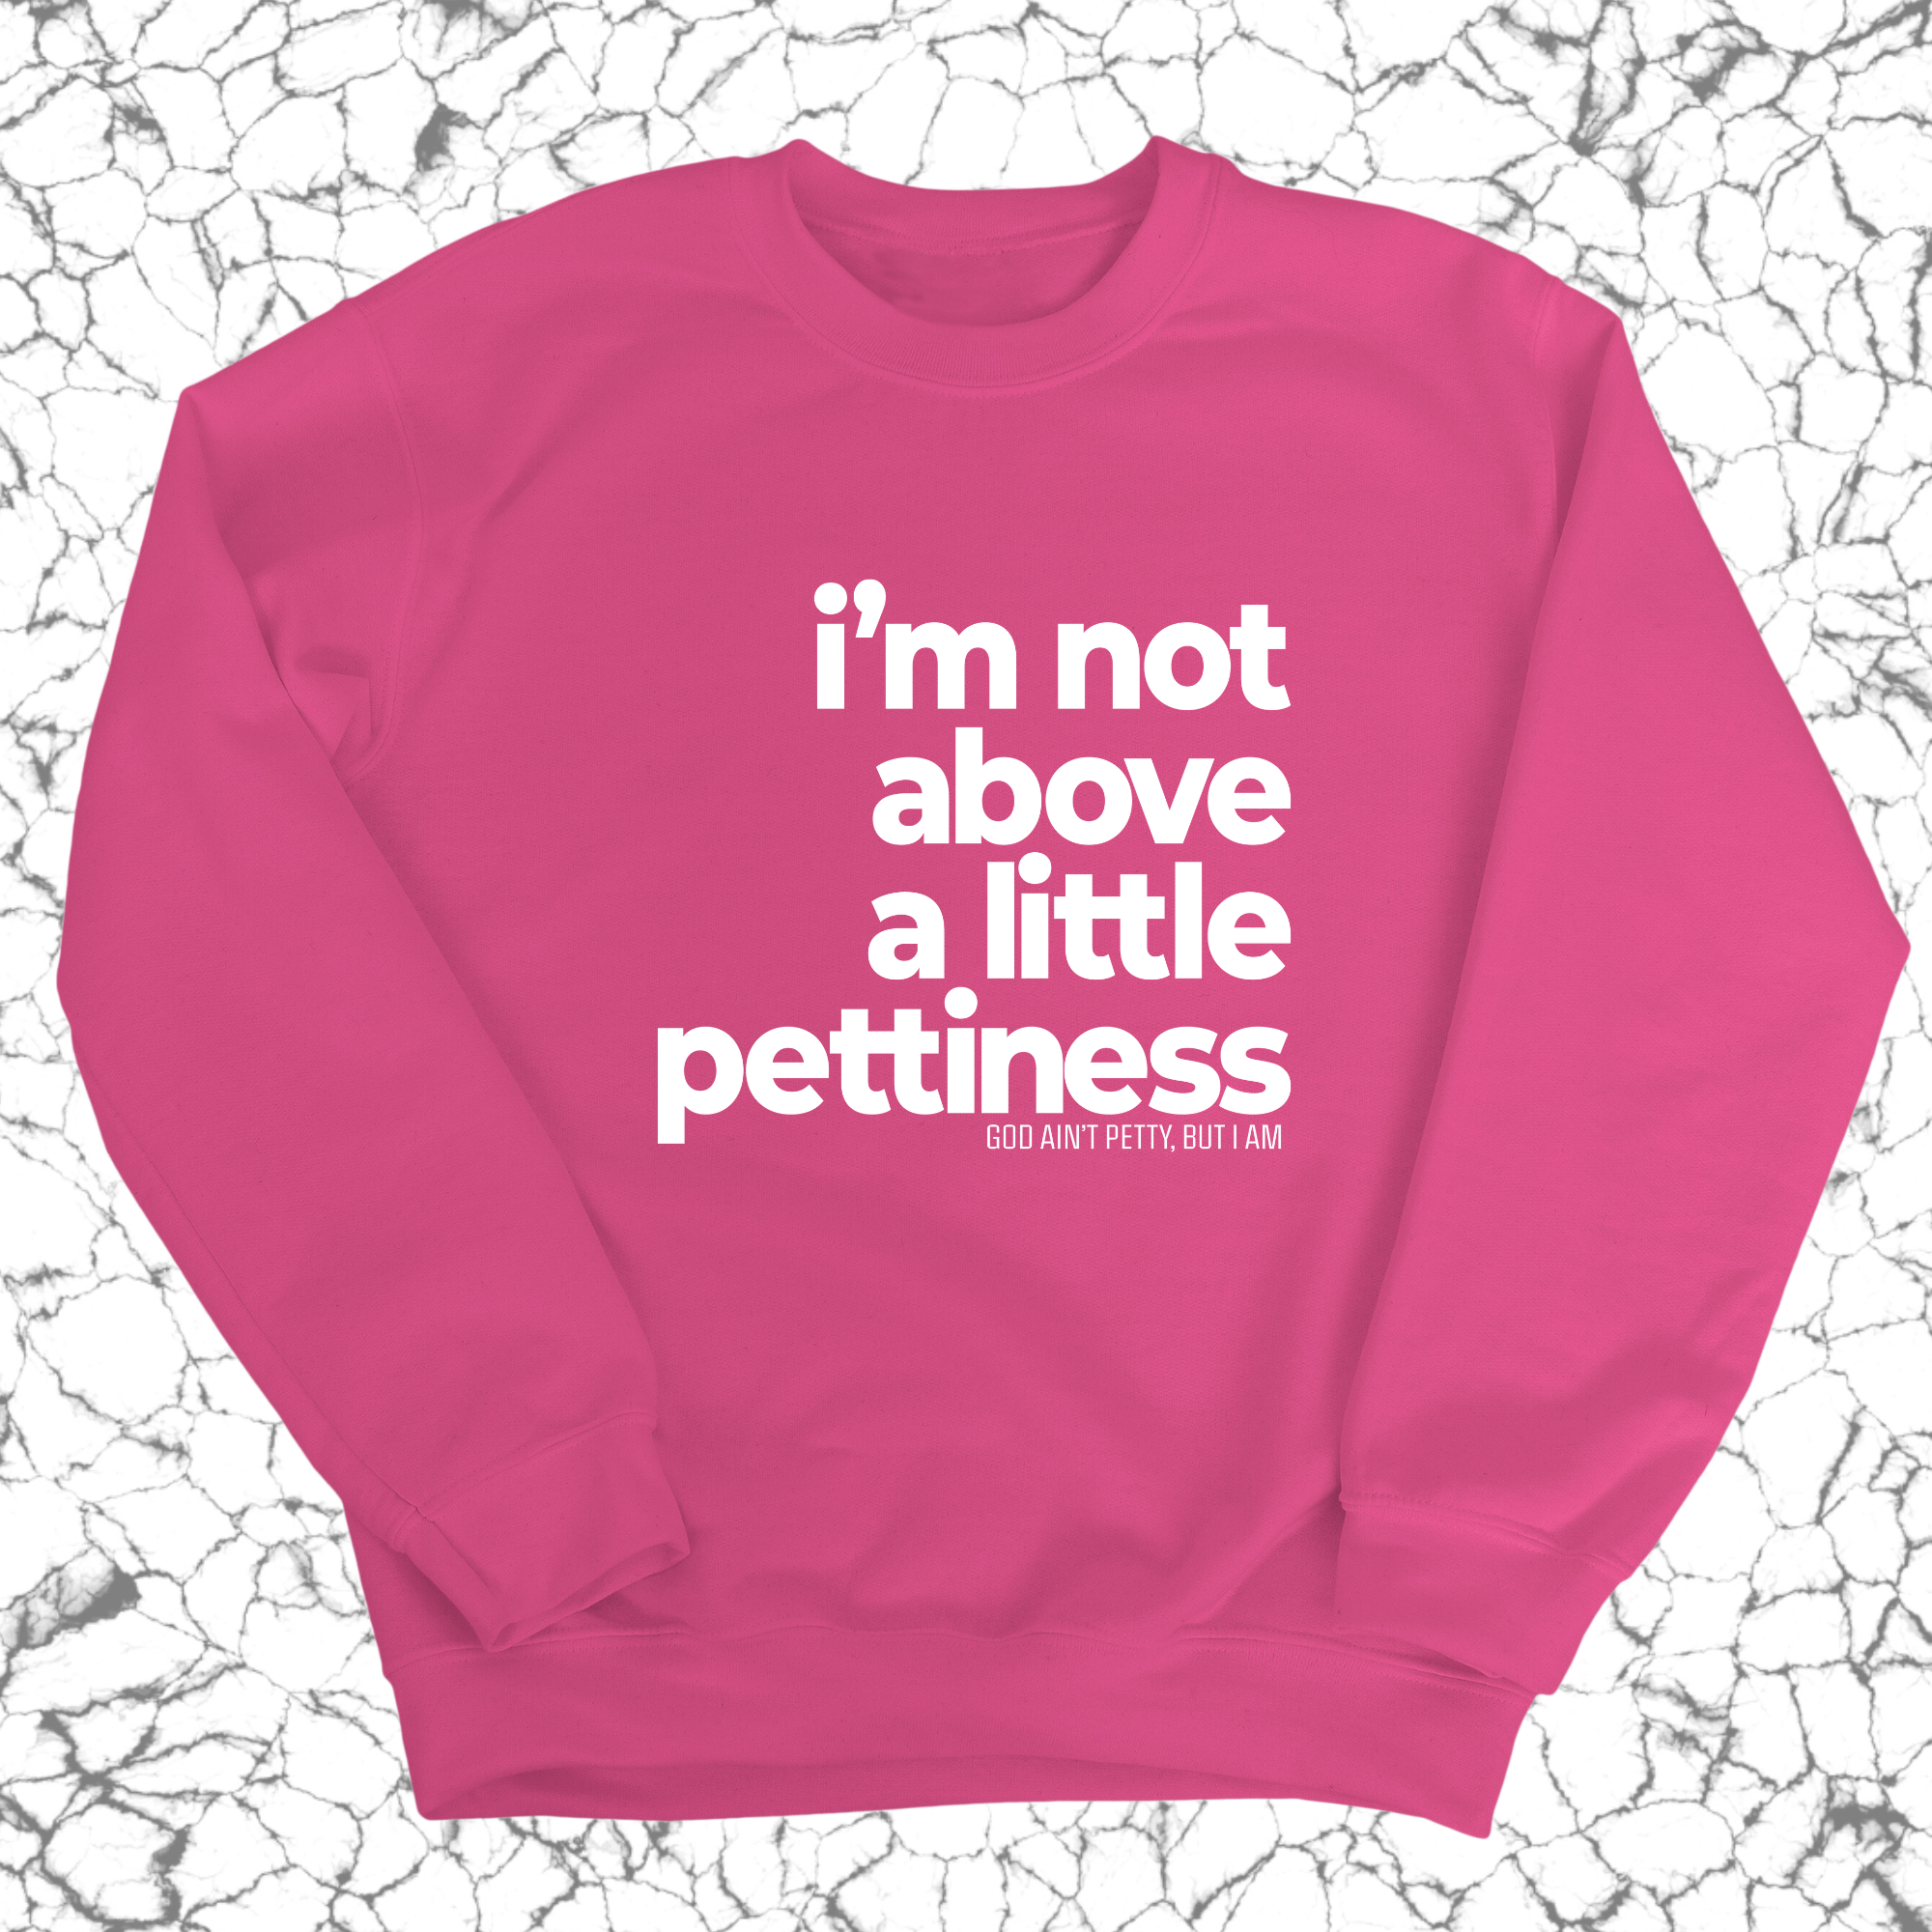 I'm not above a little pettiness Unisex Sweatshirt-Sweatshirt-The Original God Ain't Petty But I Am